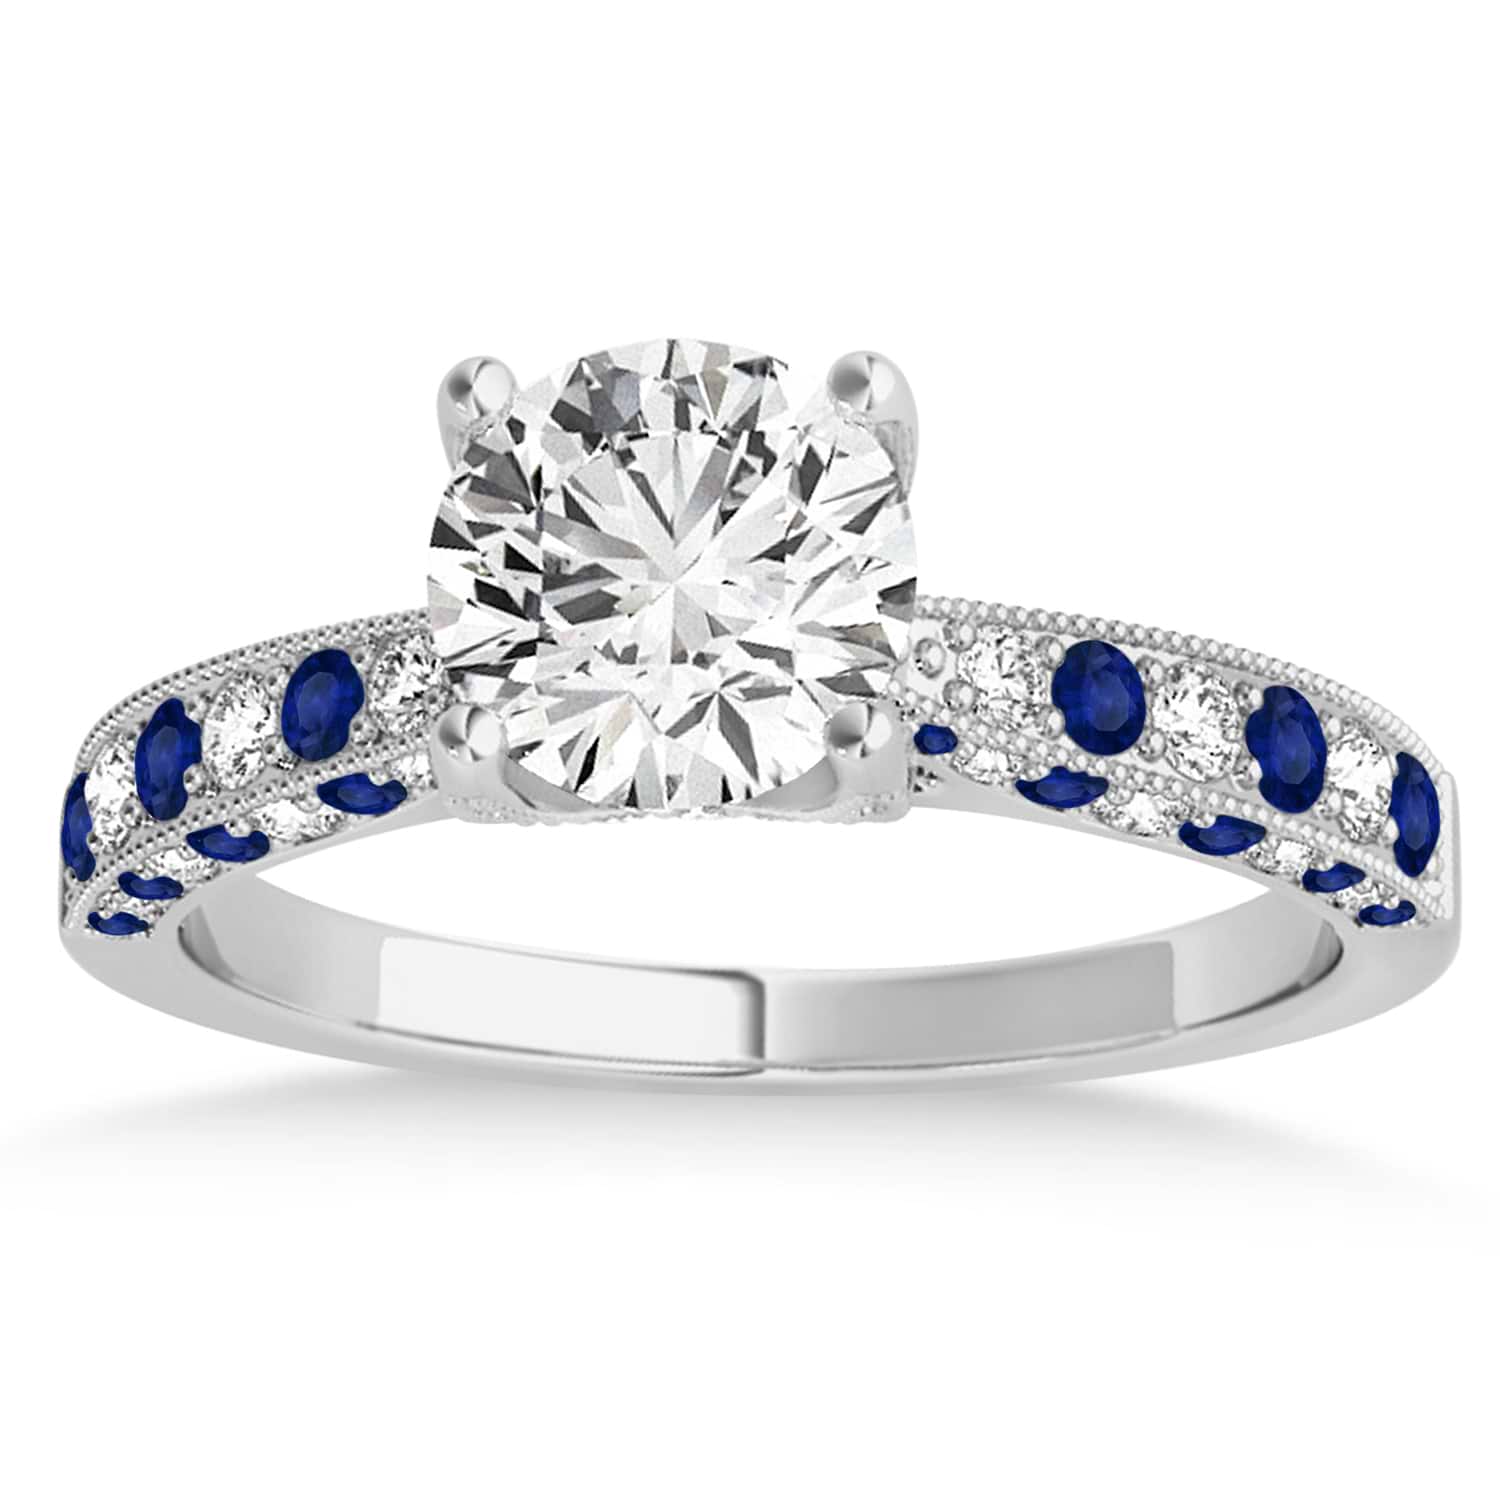 Alternating Diamond & Blue Sapphire Engravable Engagement Ring in 18k White Gold (0.45ct)